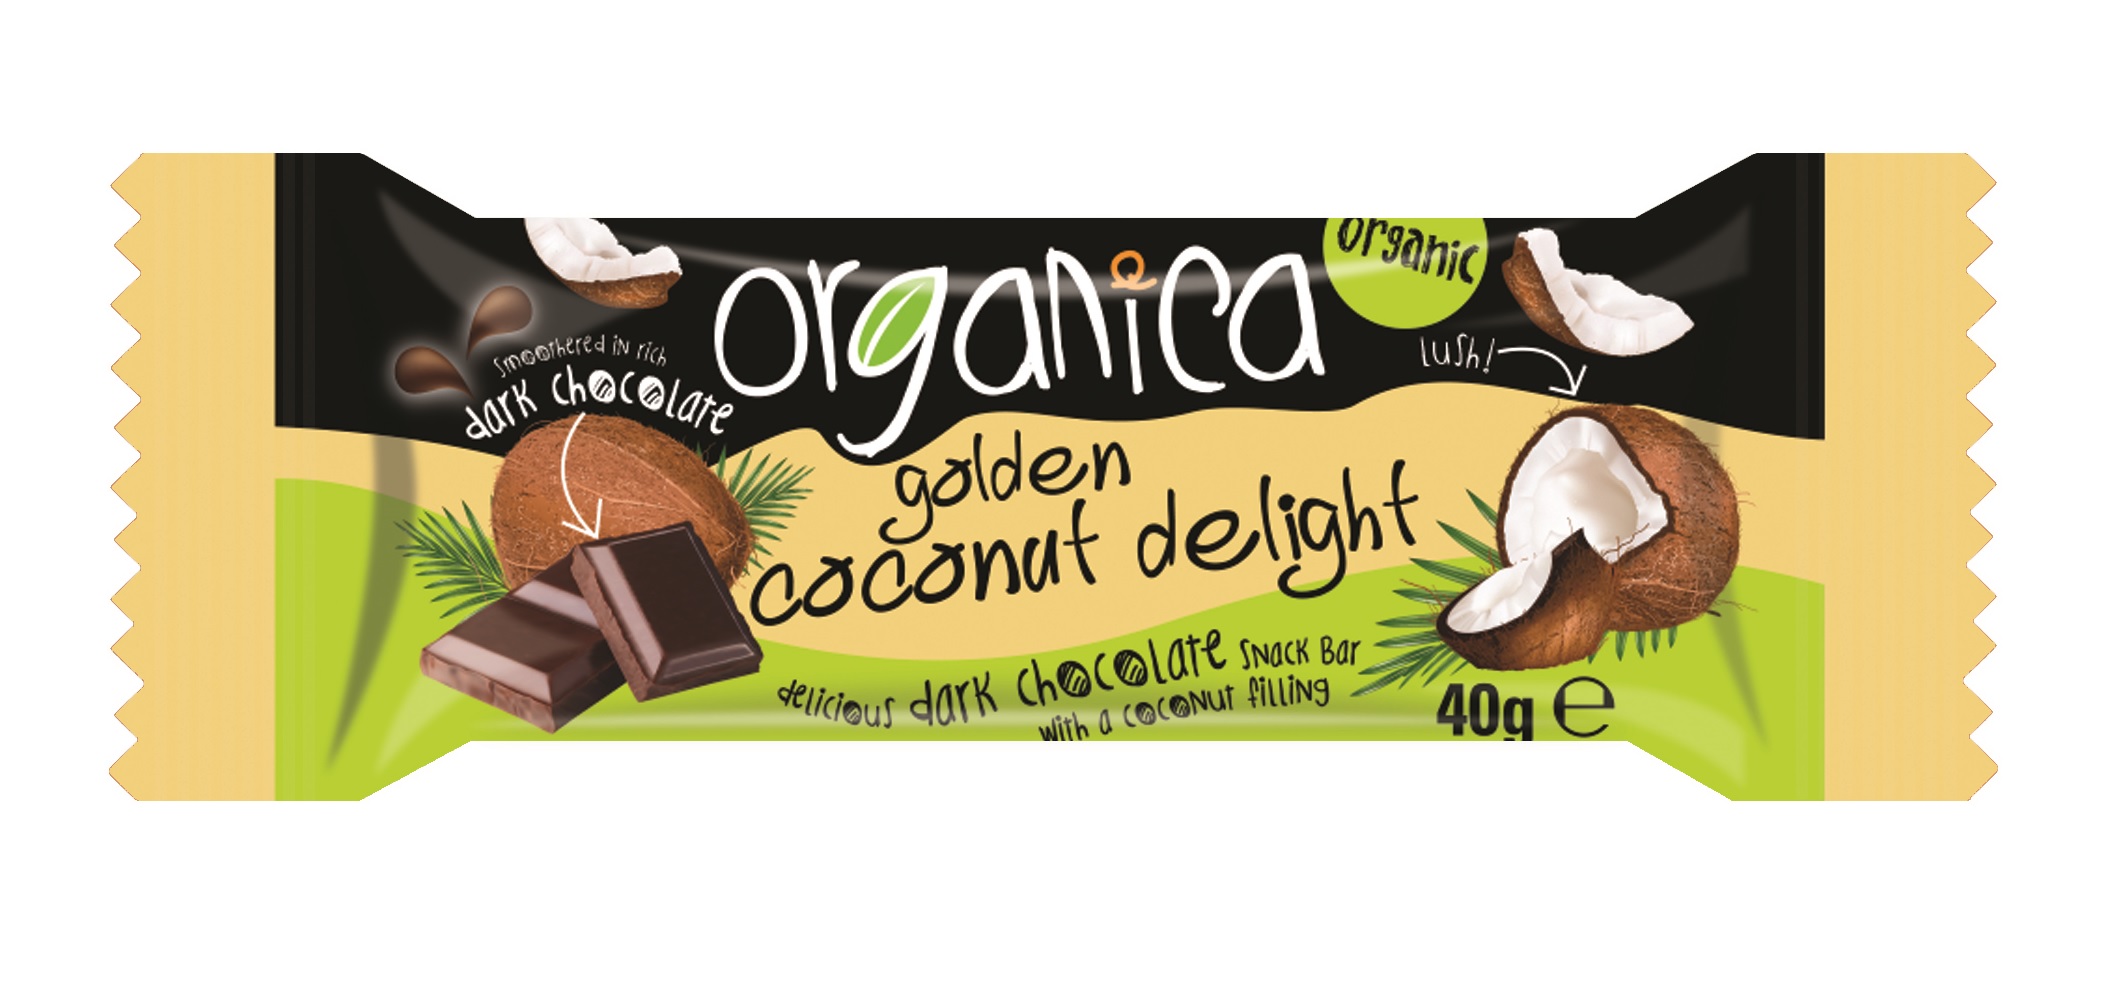 Golden Coconut Delight Dark Chocolate,  40g (a)